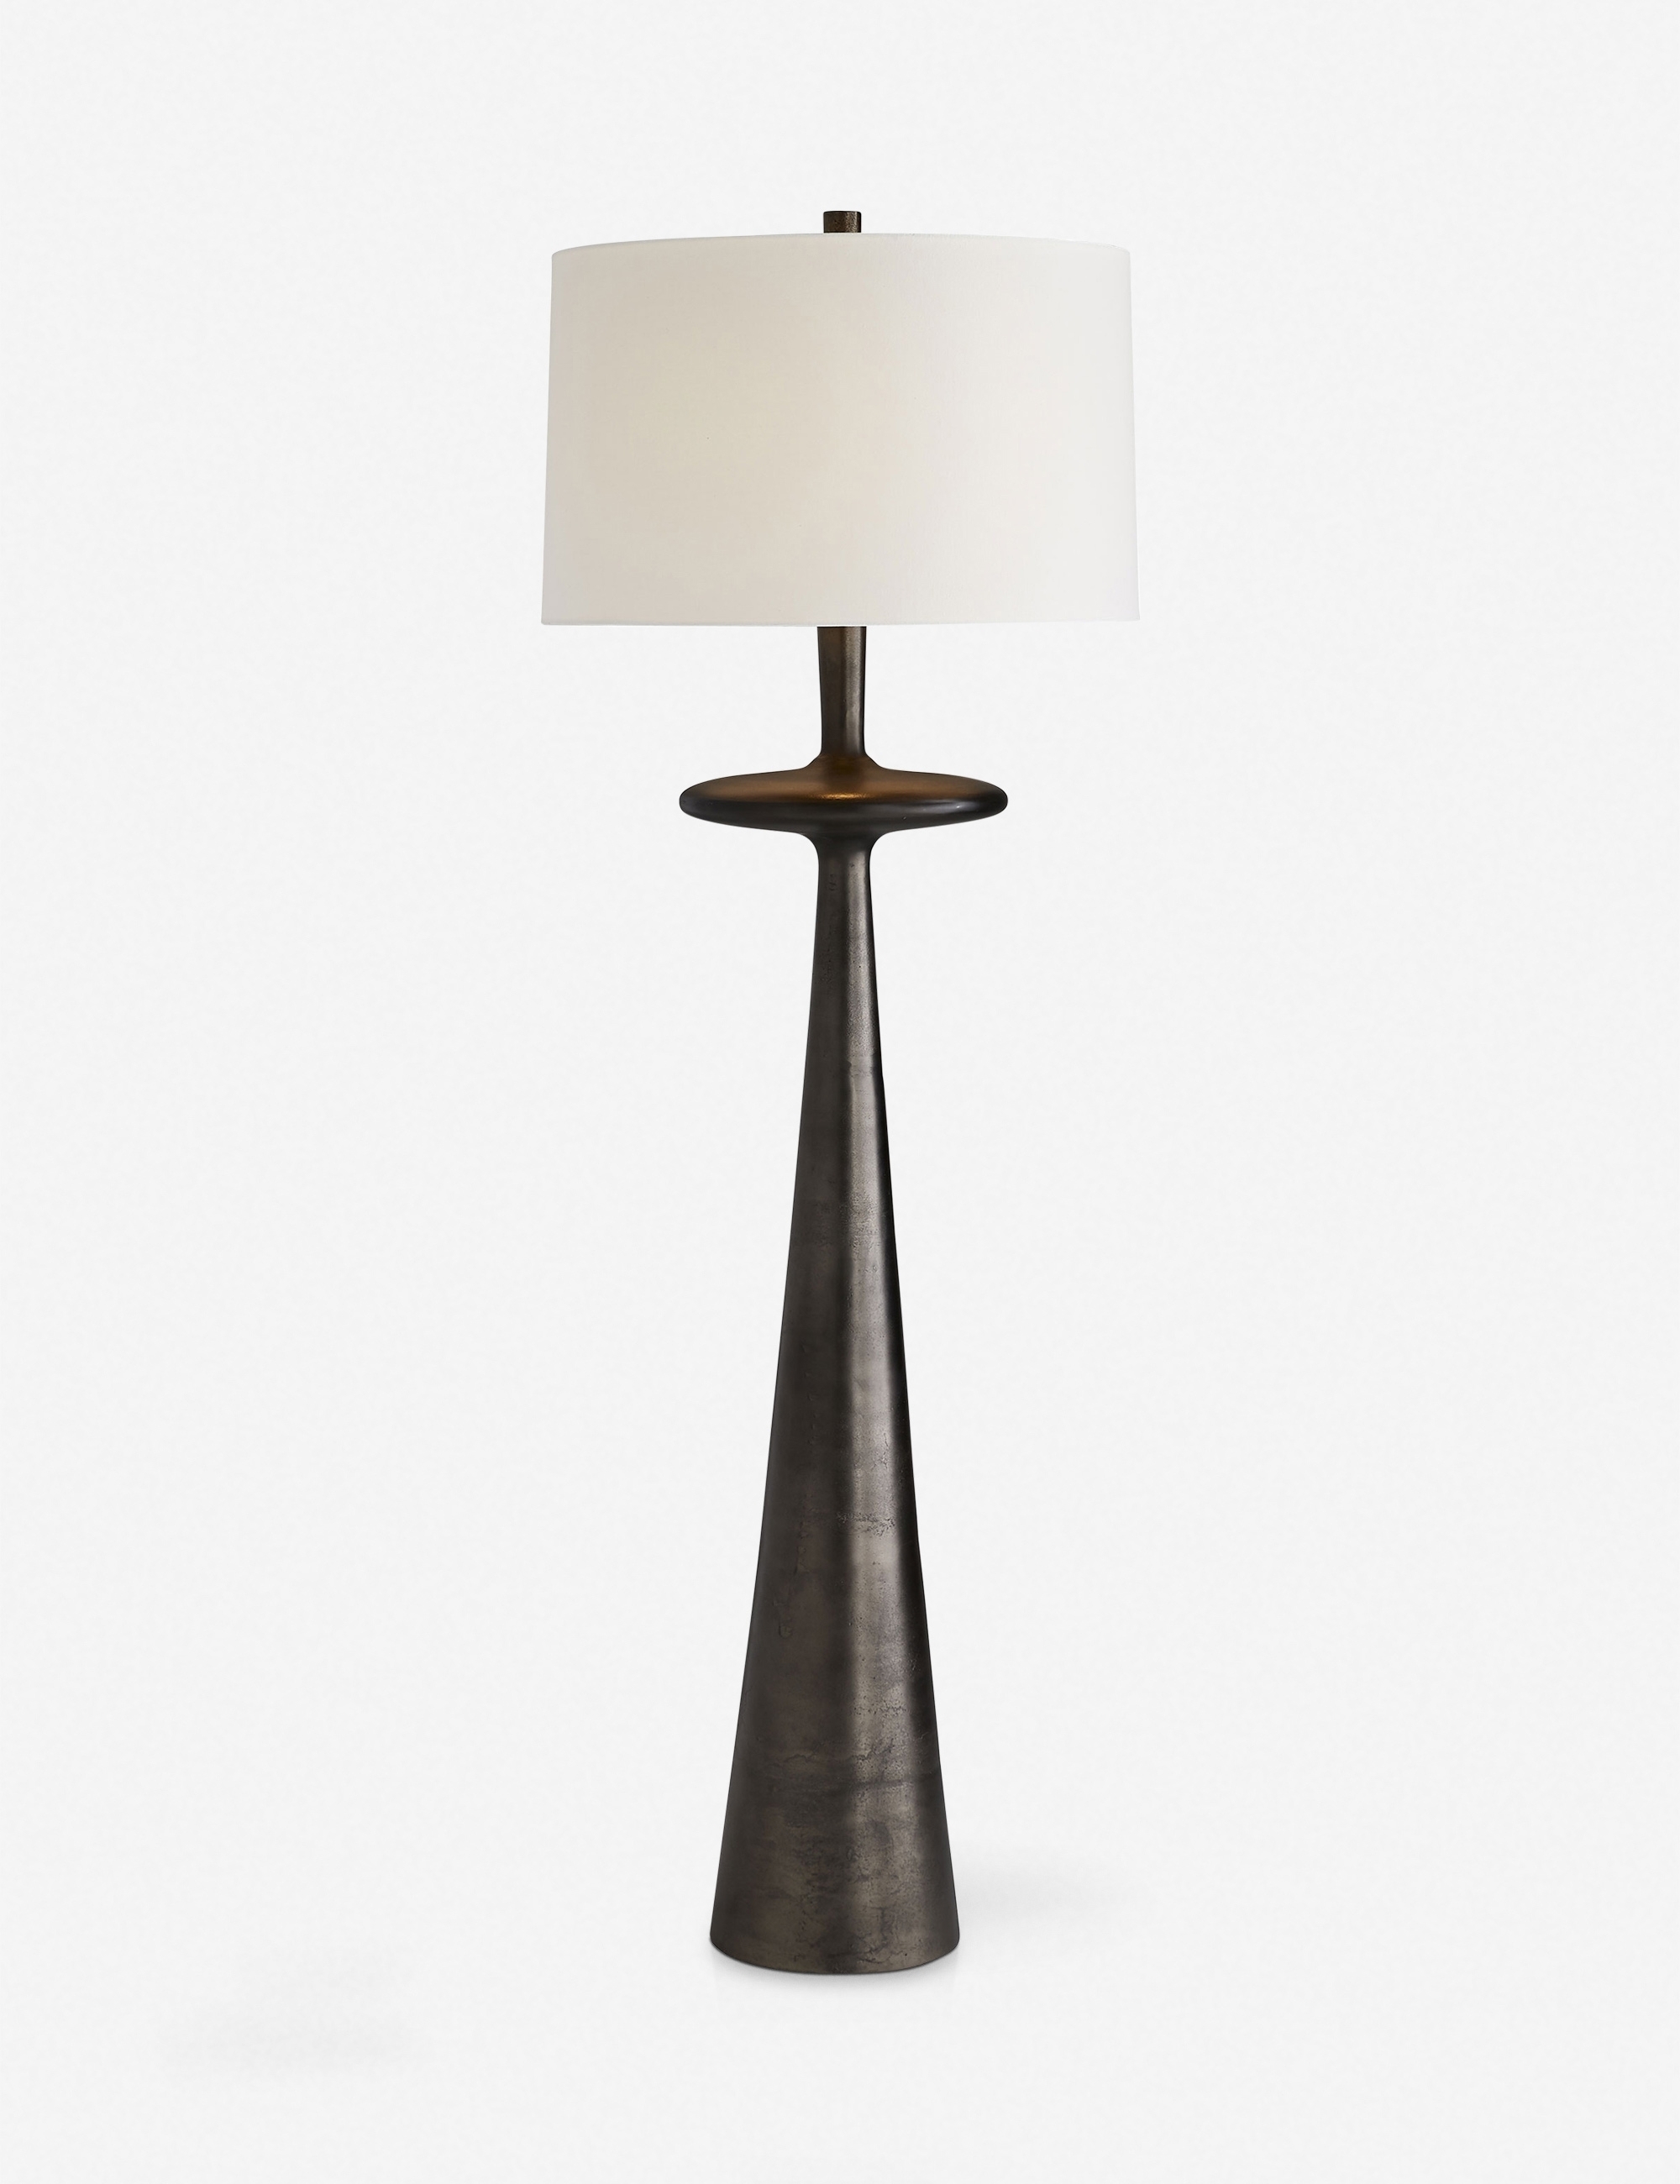 Putney Floor Lamp by Arteriors - Image 2